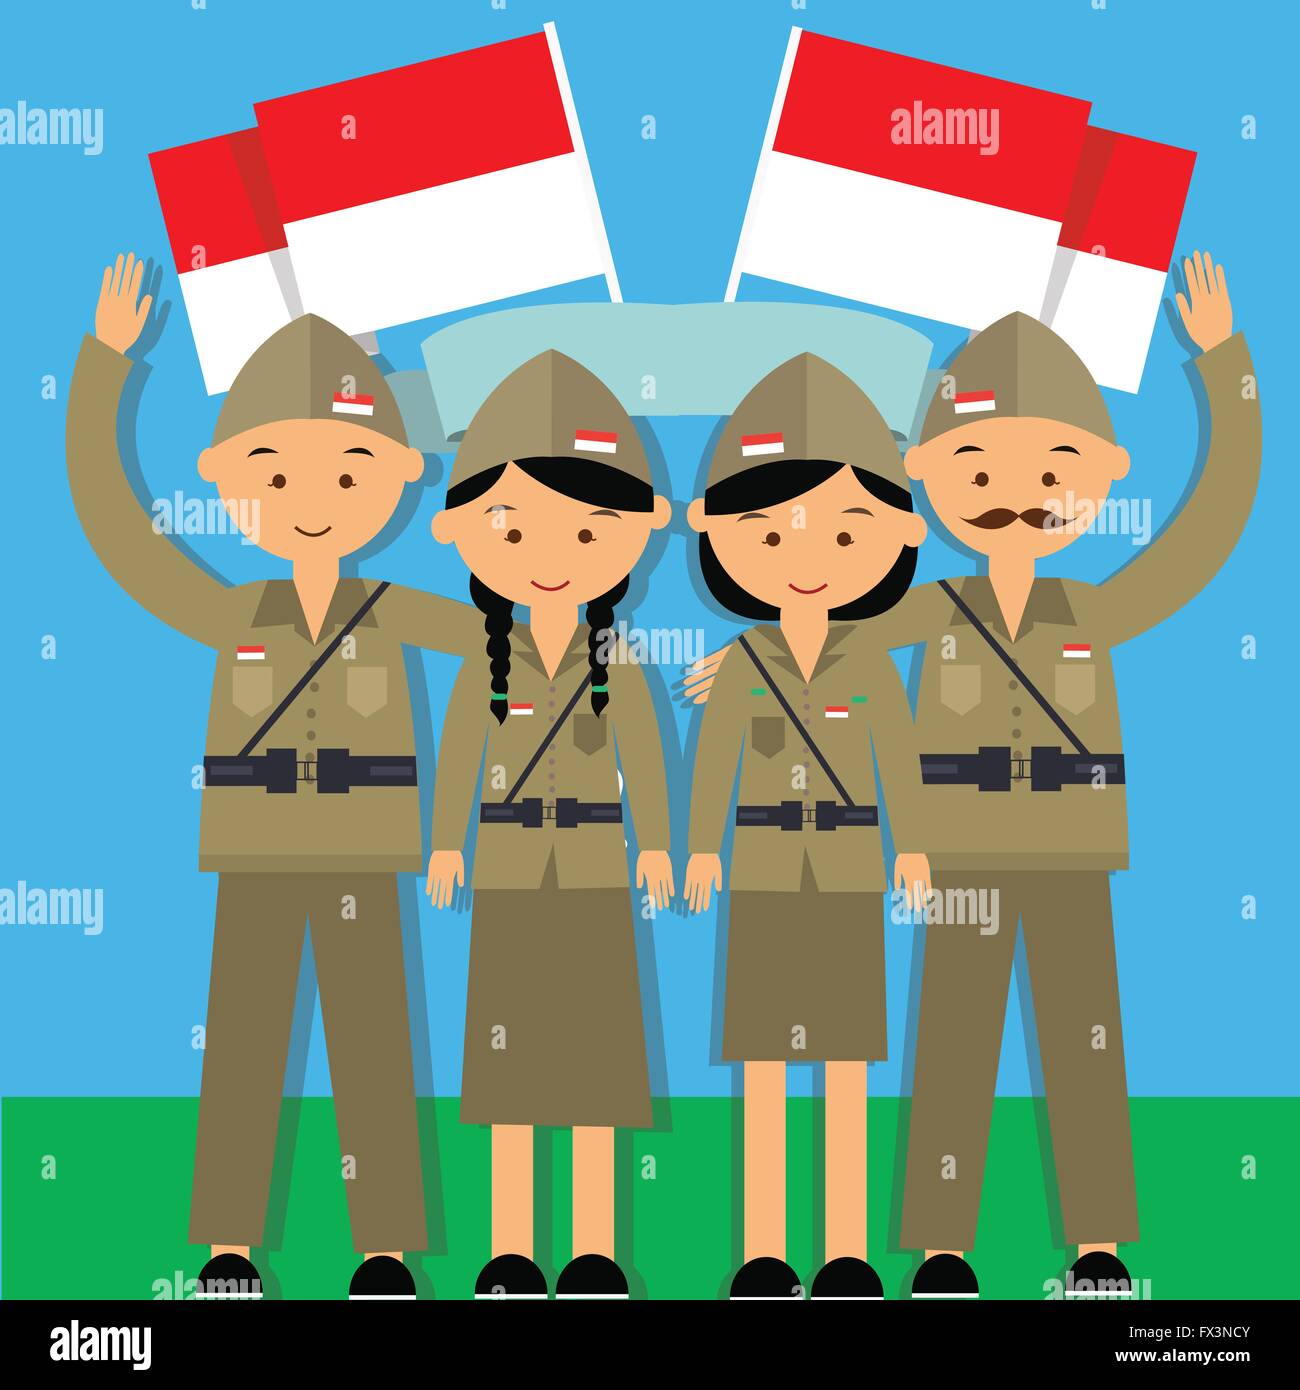 Stock Photo Independence Day Hari Pahlawan 17 Agustus 1945 Veteran Indonesia Fighter 102115579